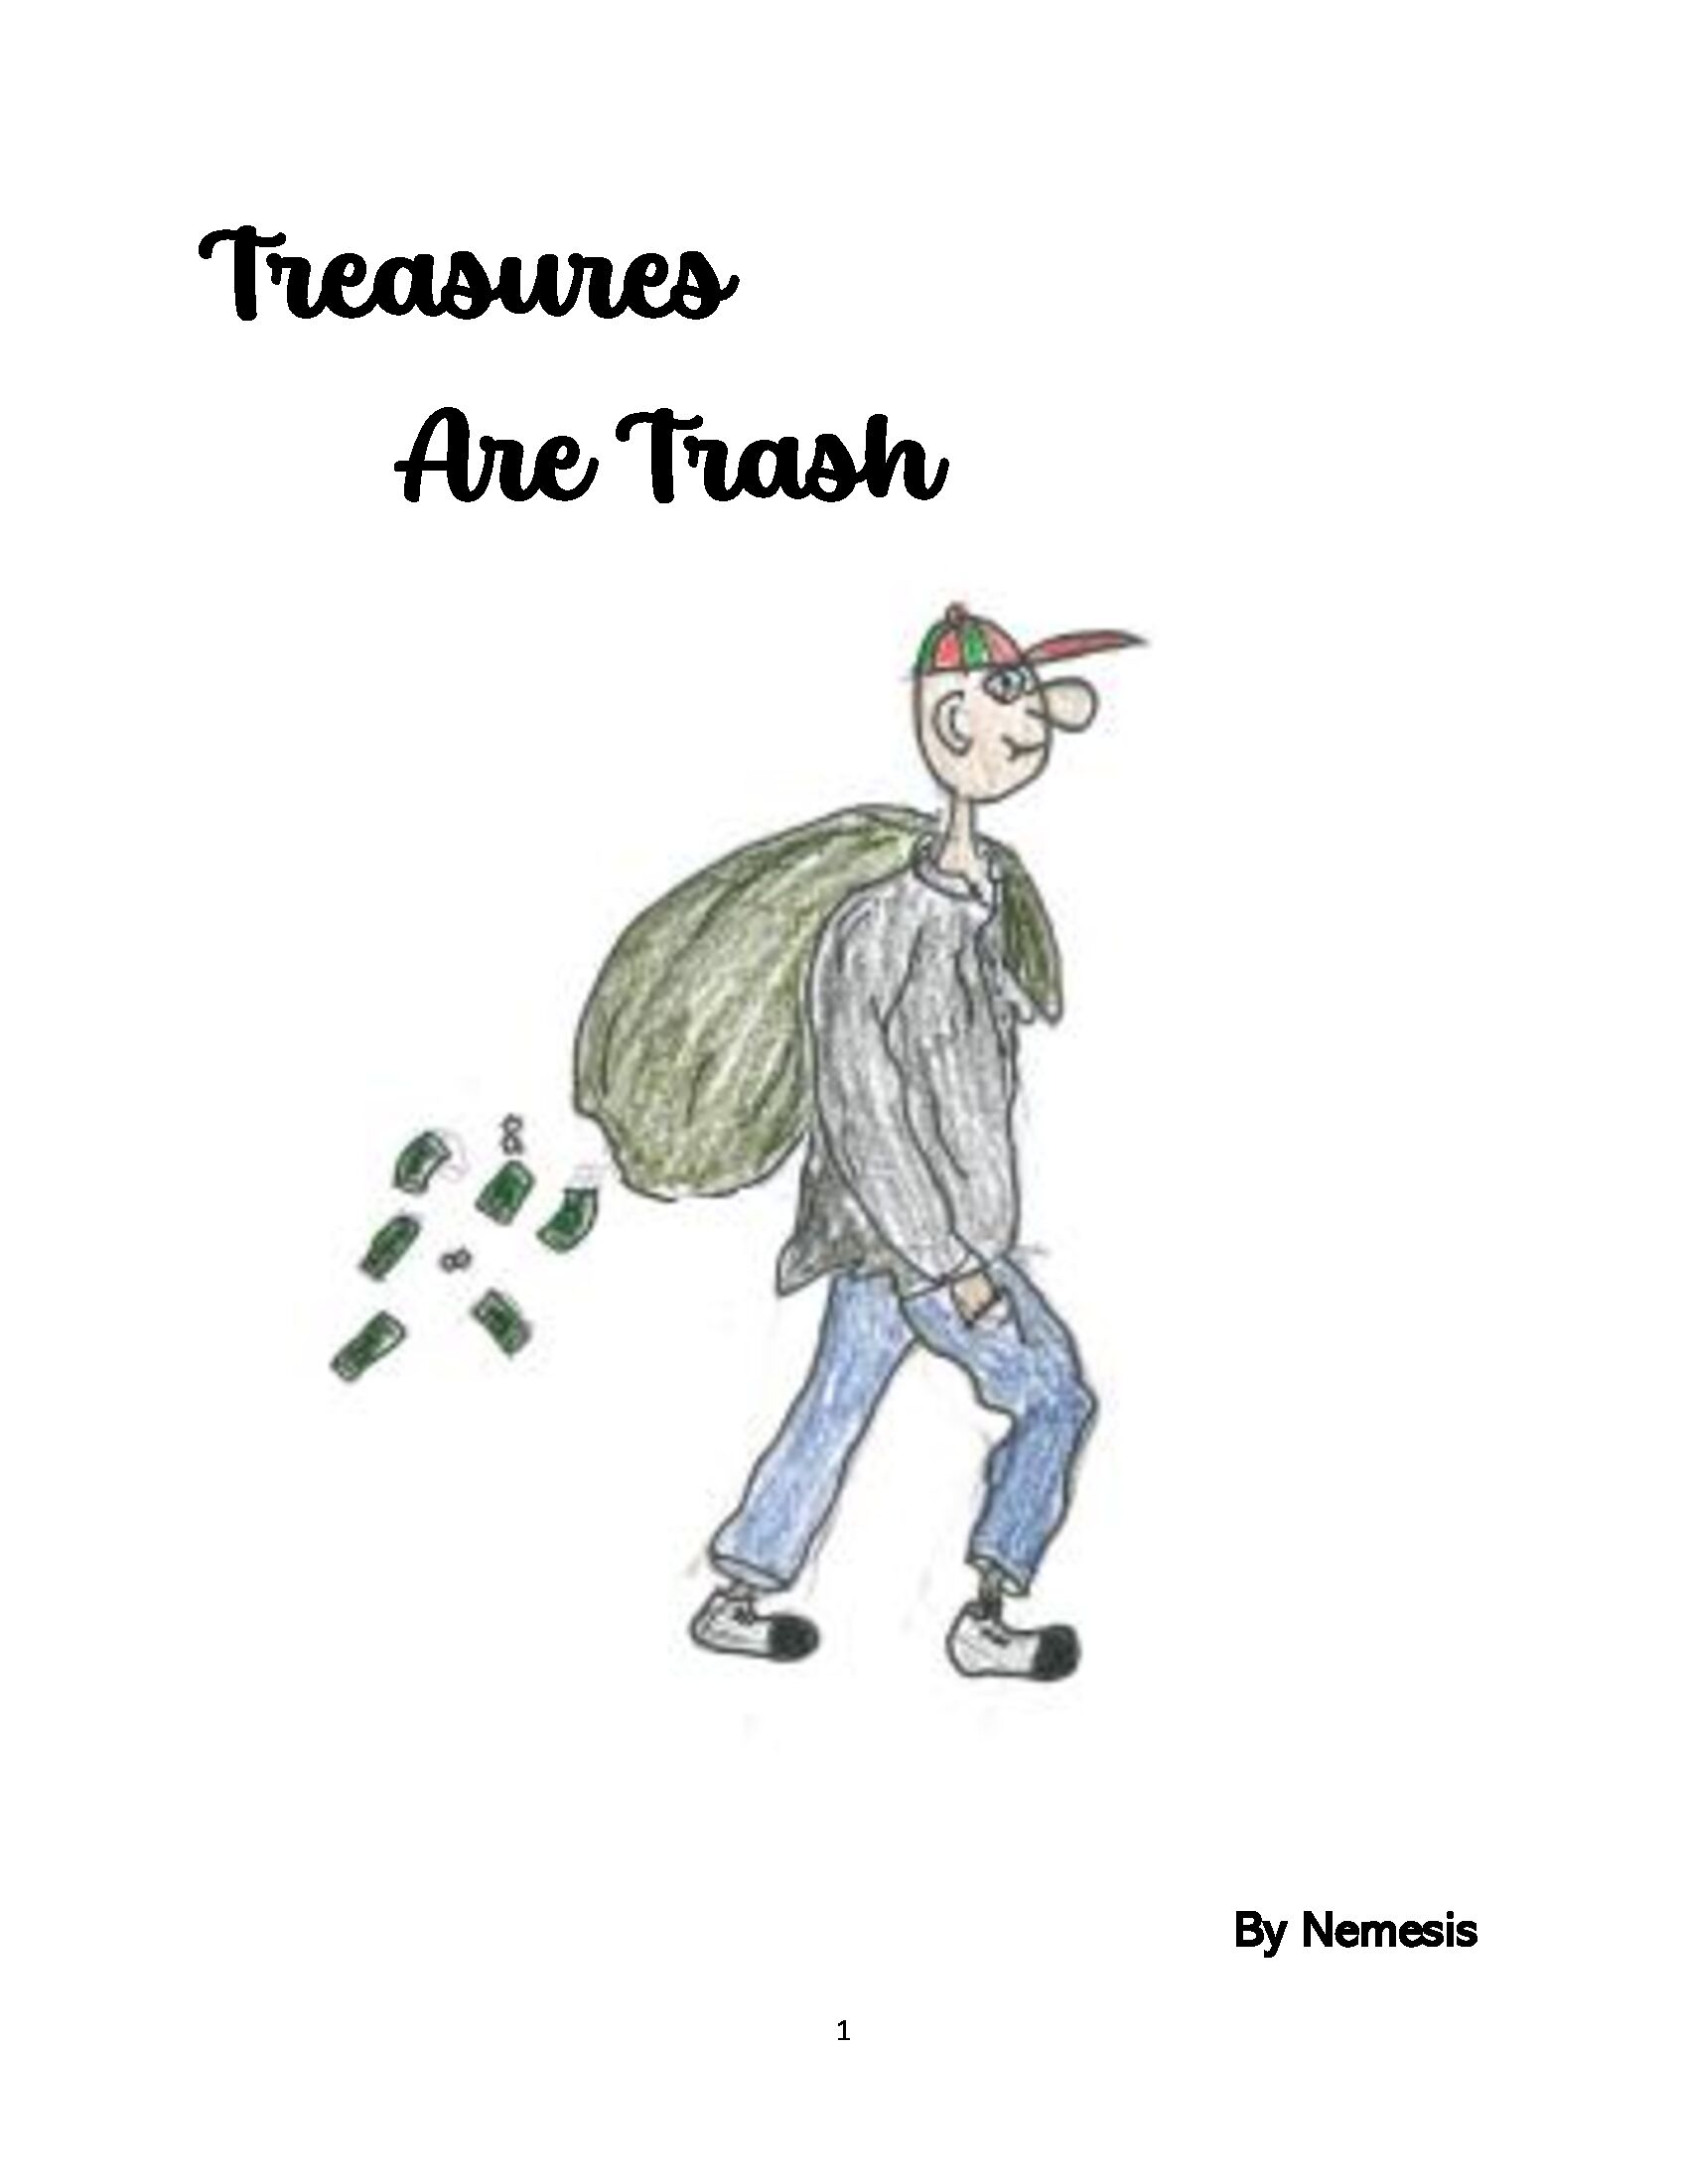 Treasures are Trash